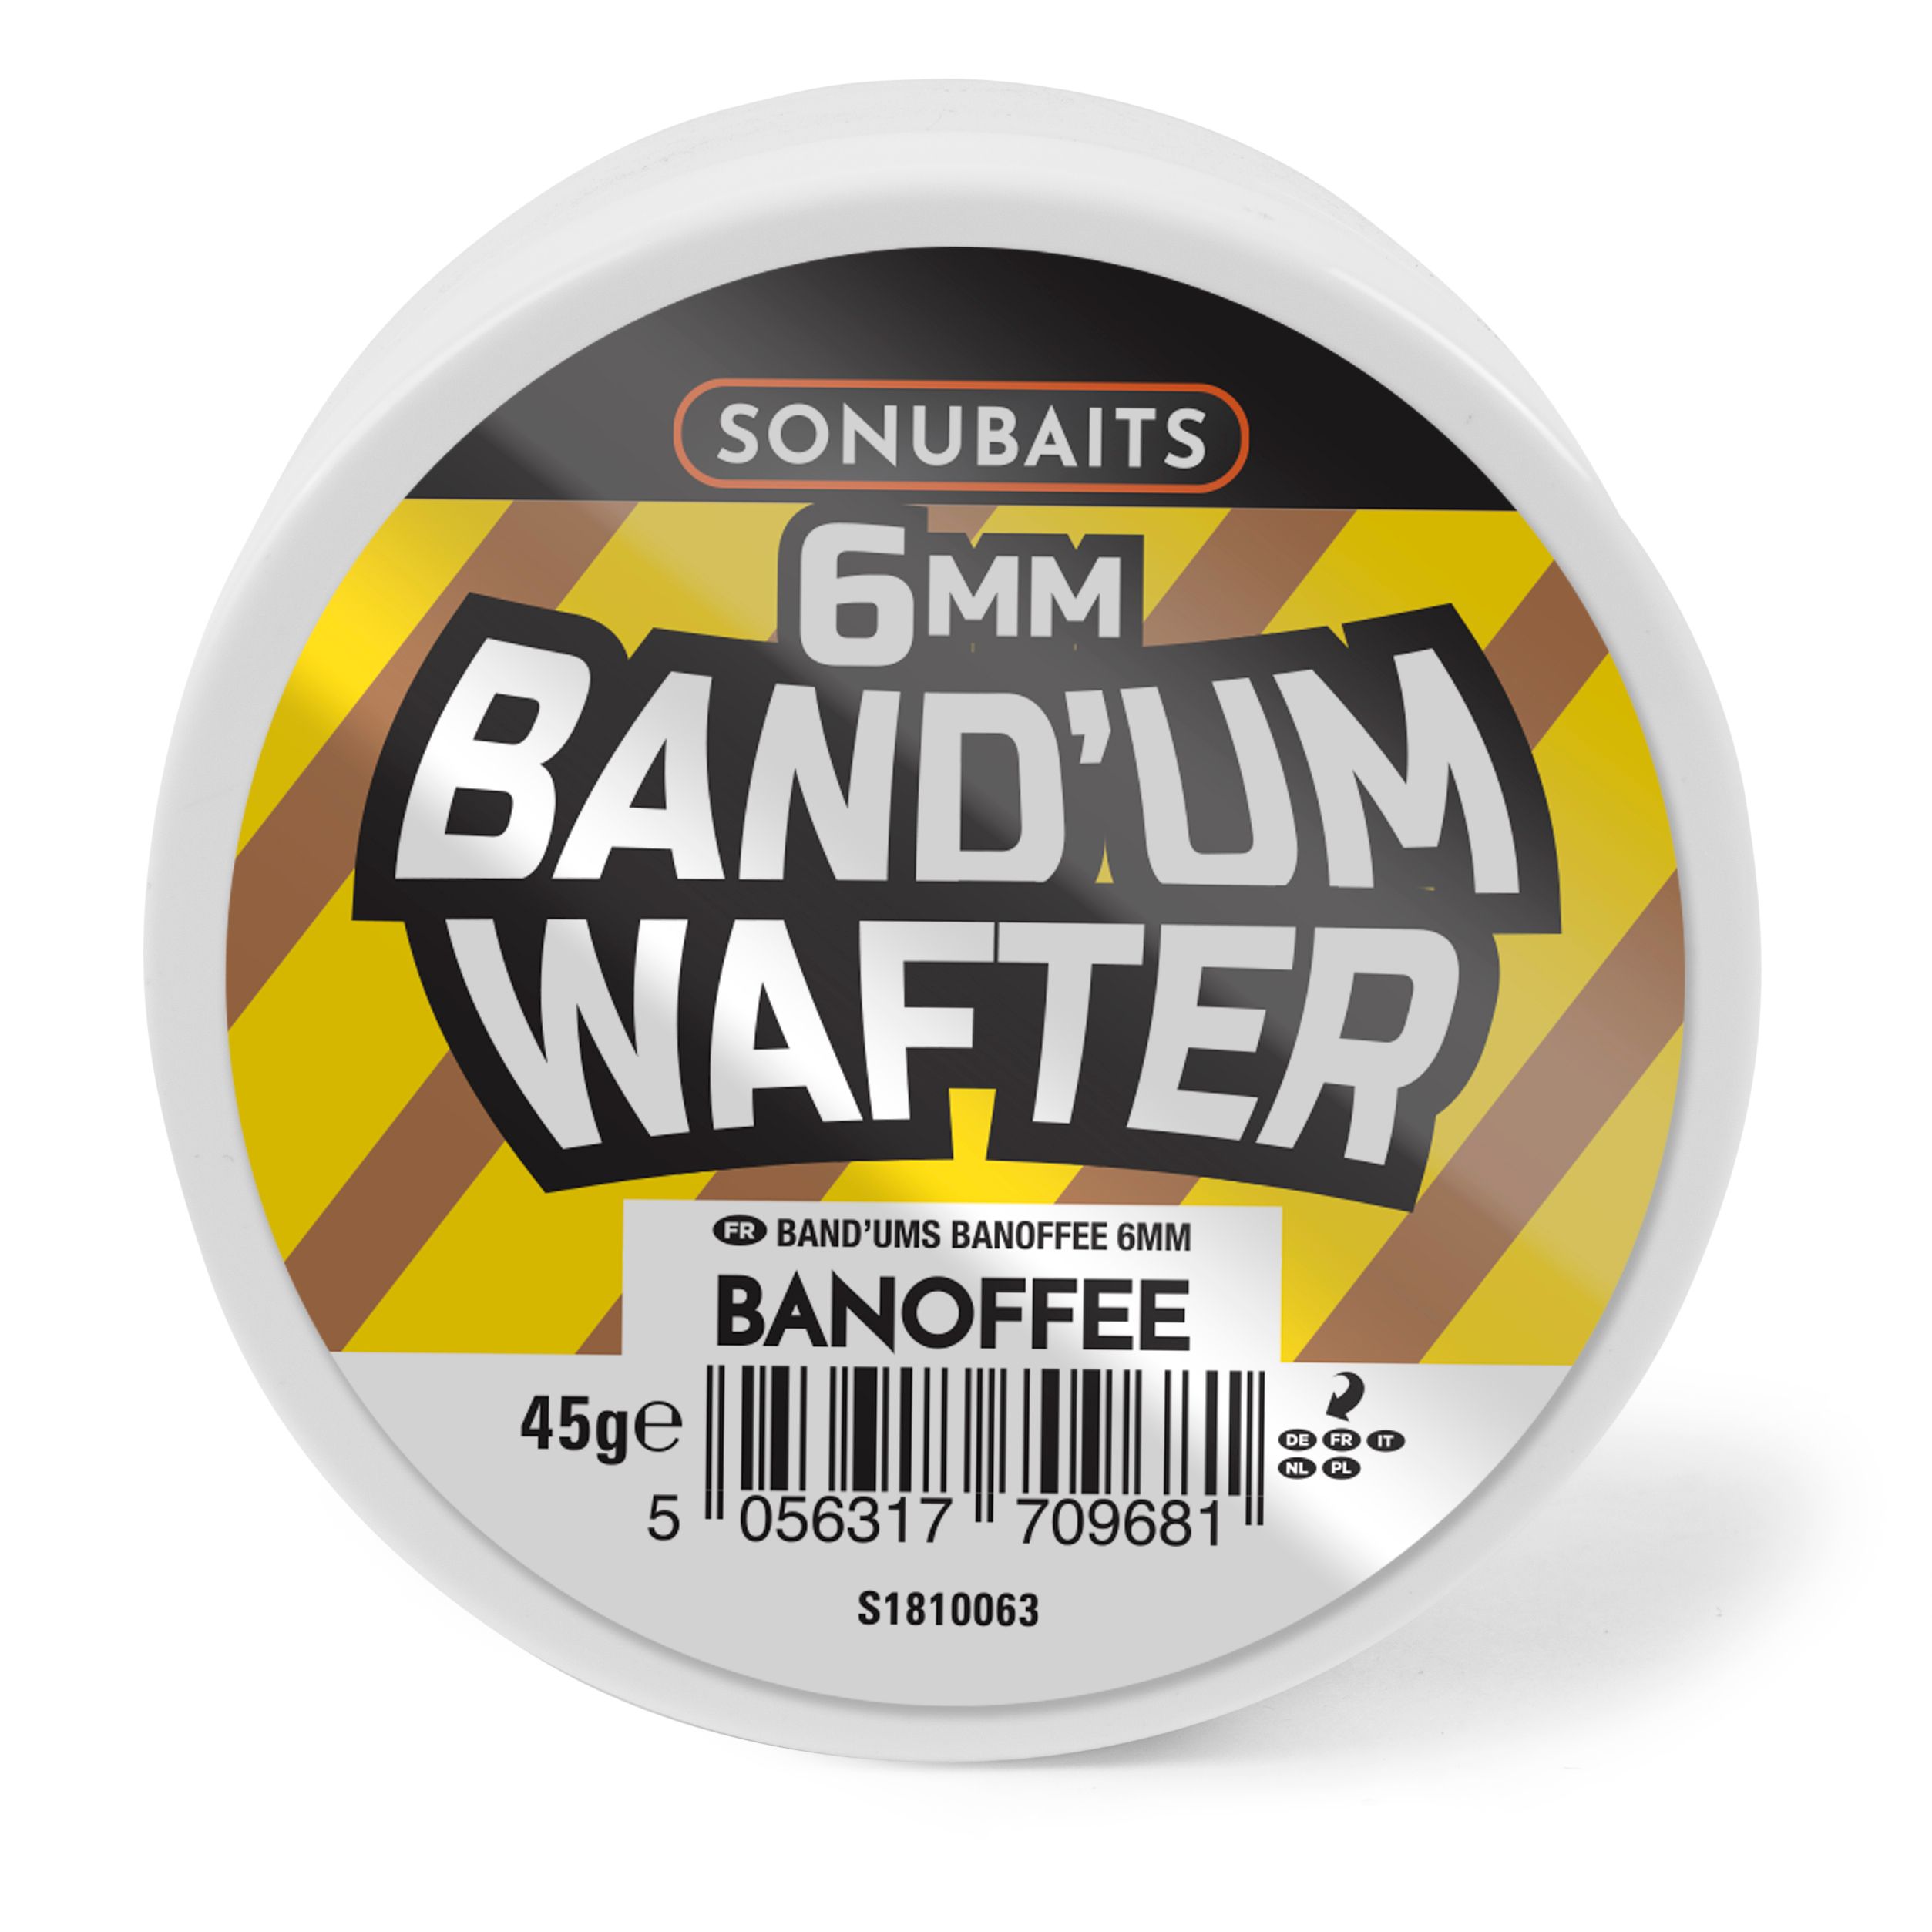 Sonubaits Band'um Wafters 6mm - Banoffee